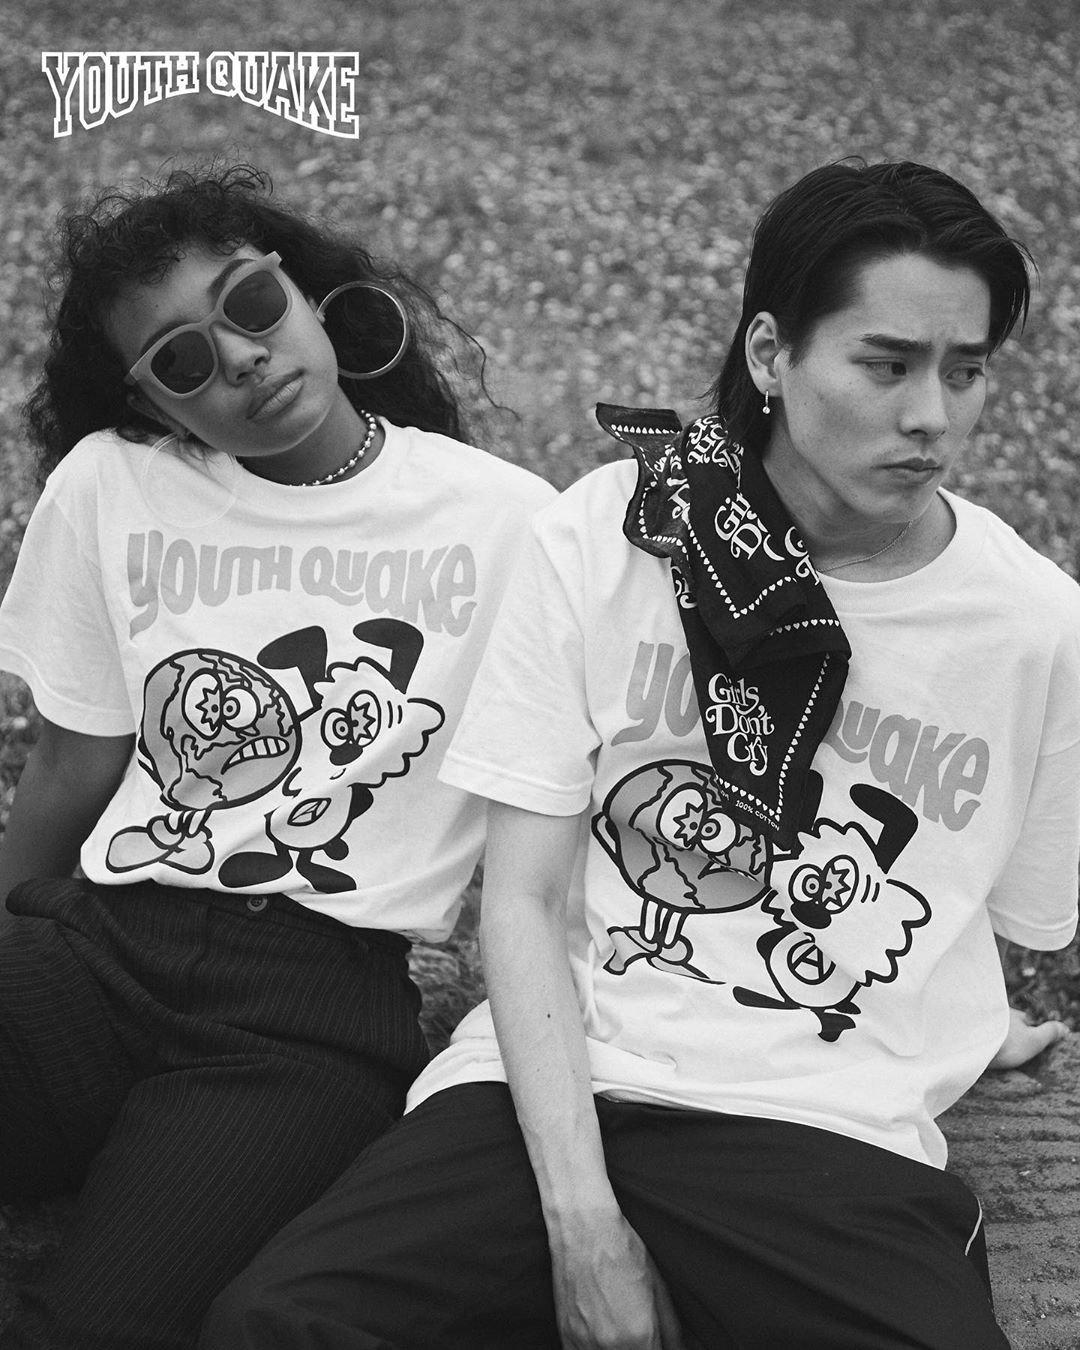 【VERDY × YouthQuake】限定コラボTシャツ Peace Teeが6月15日に発売予定 | UP TO DATE